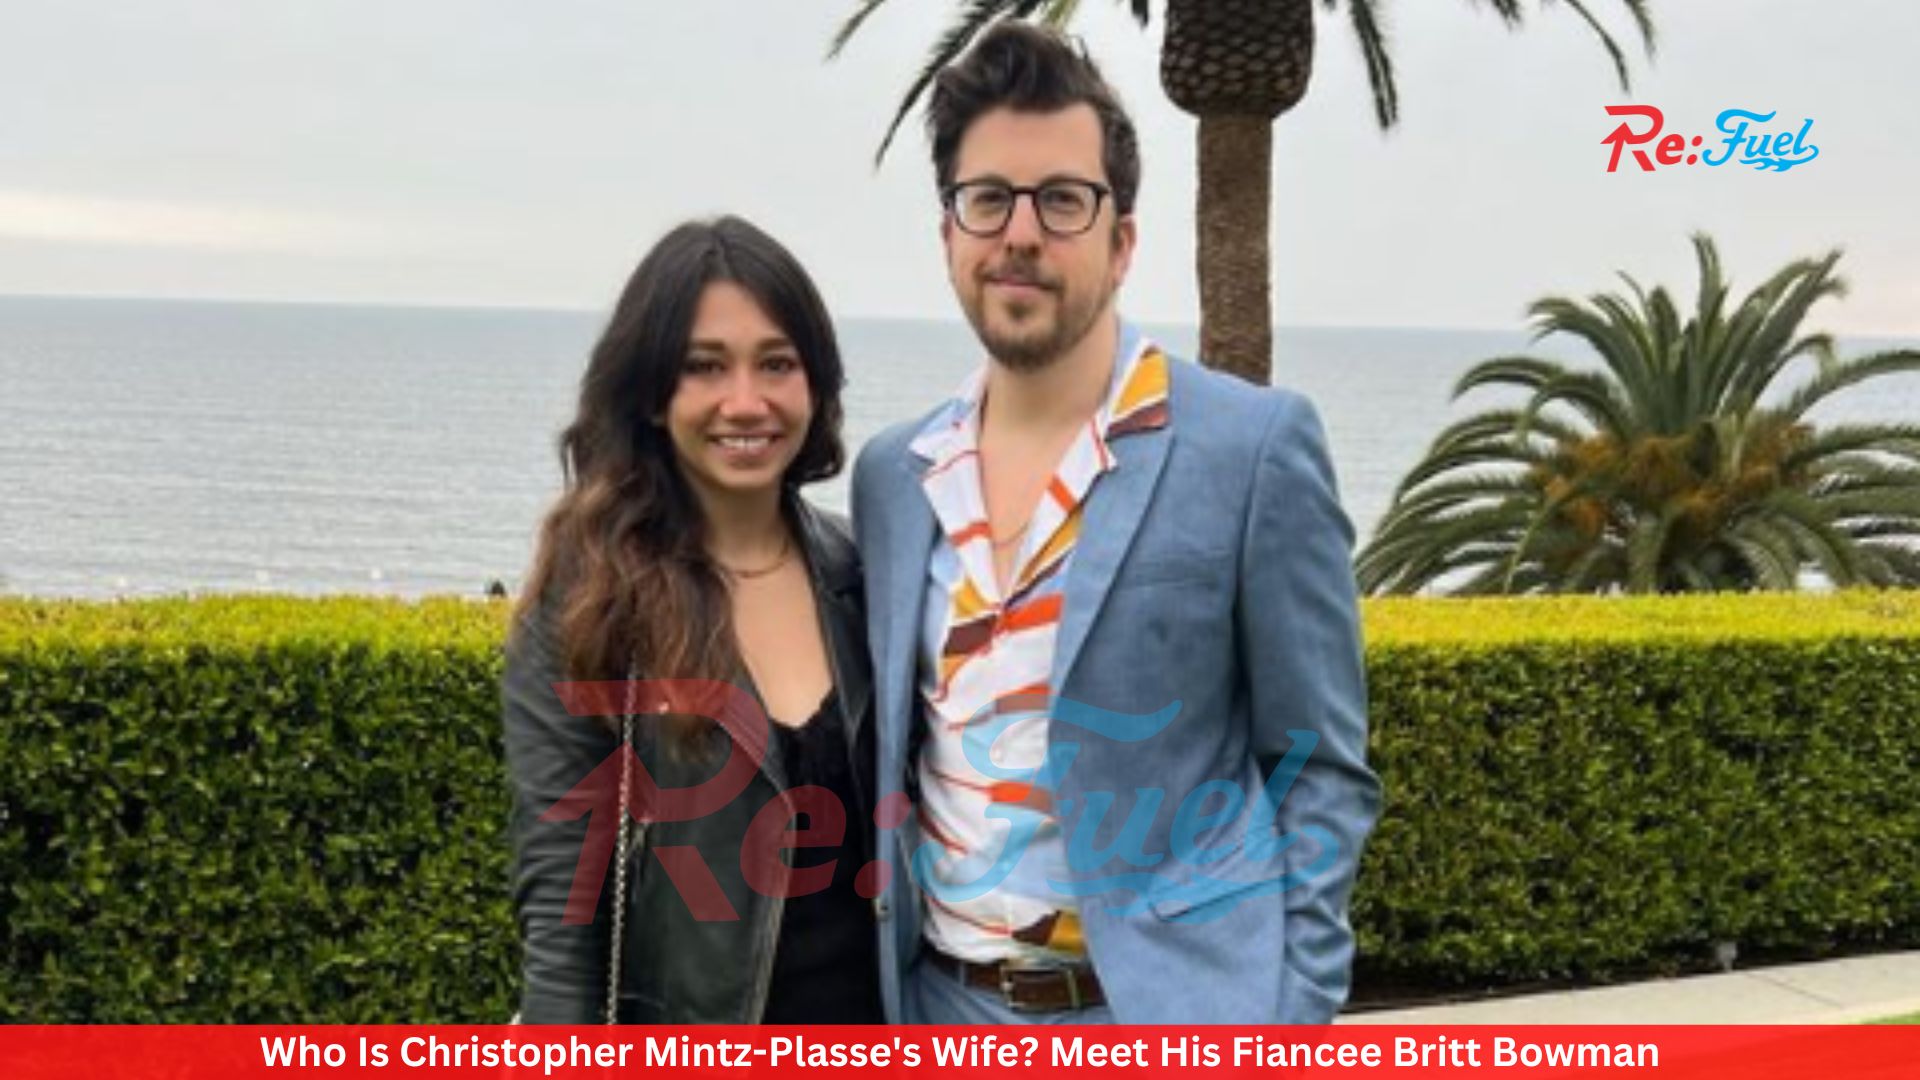 Who Is Christopher Mintz-Plasse's Wife? Meet His Fiancee Britt Bowman